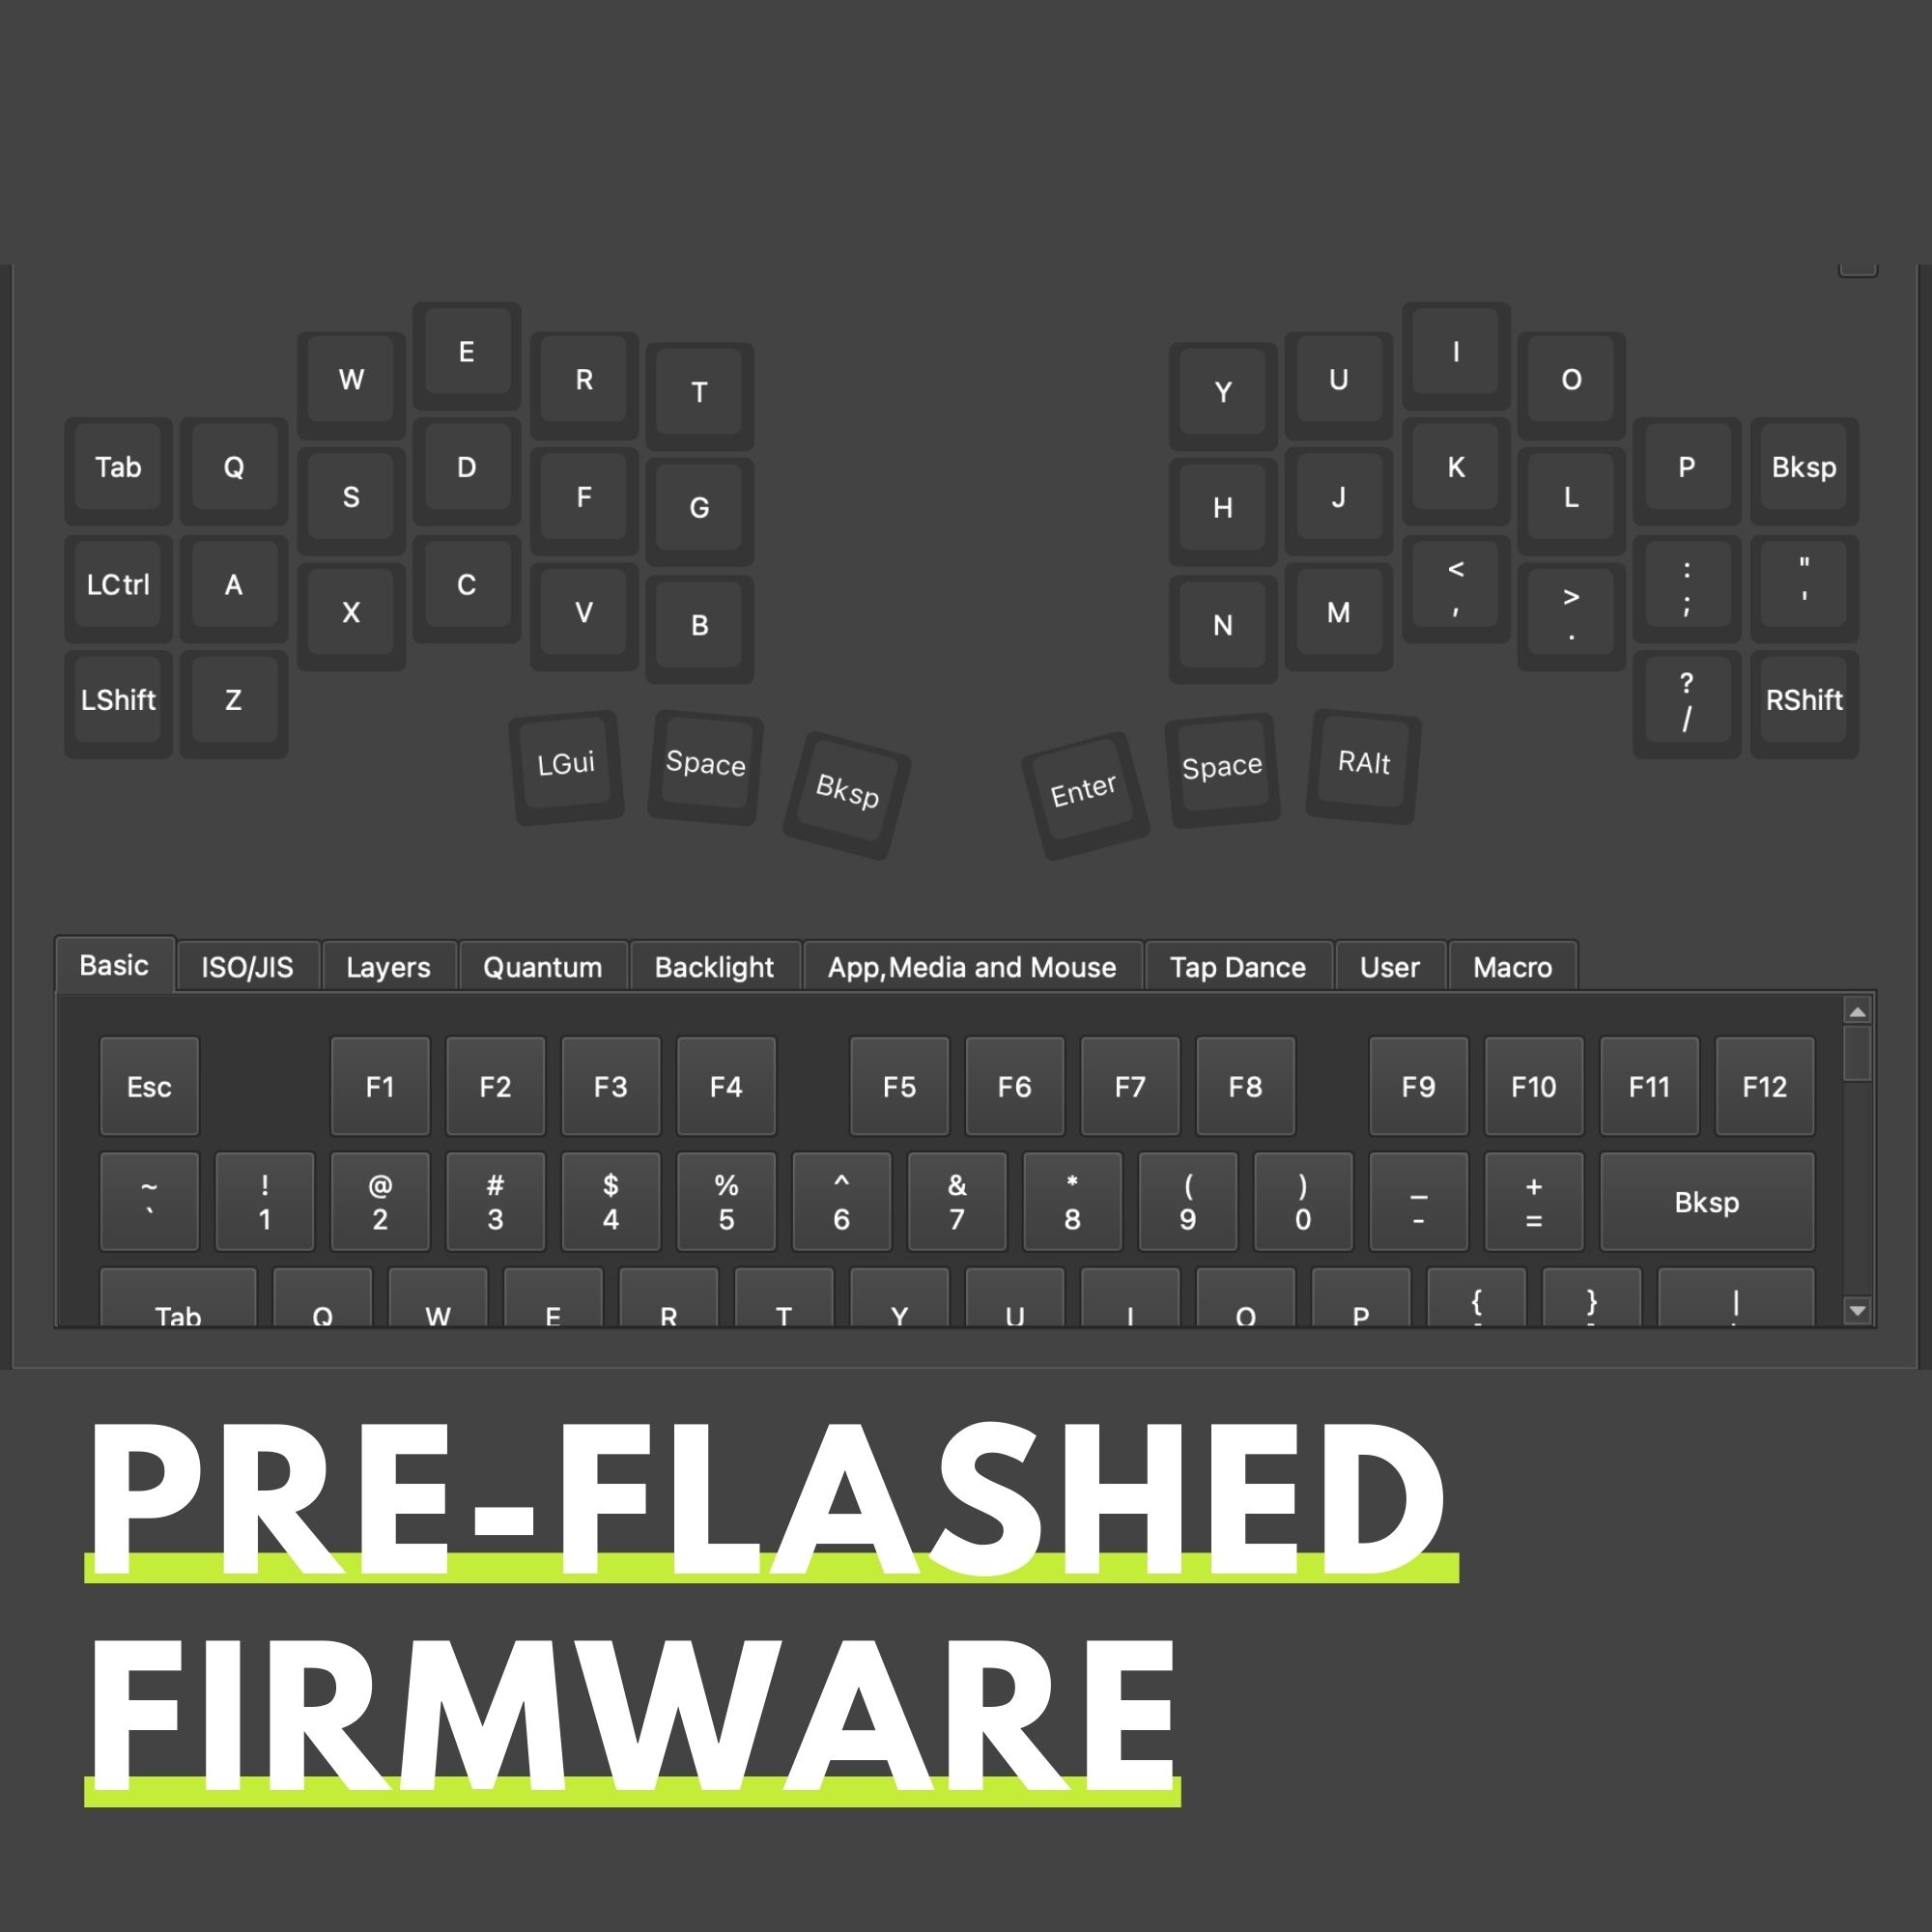 Pre-soldered Piantor (Cantor Layout with Hotswap) 42 Keys / 36 Keys Diodeless RP2040 Low Profile Choc Split Keyboard